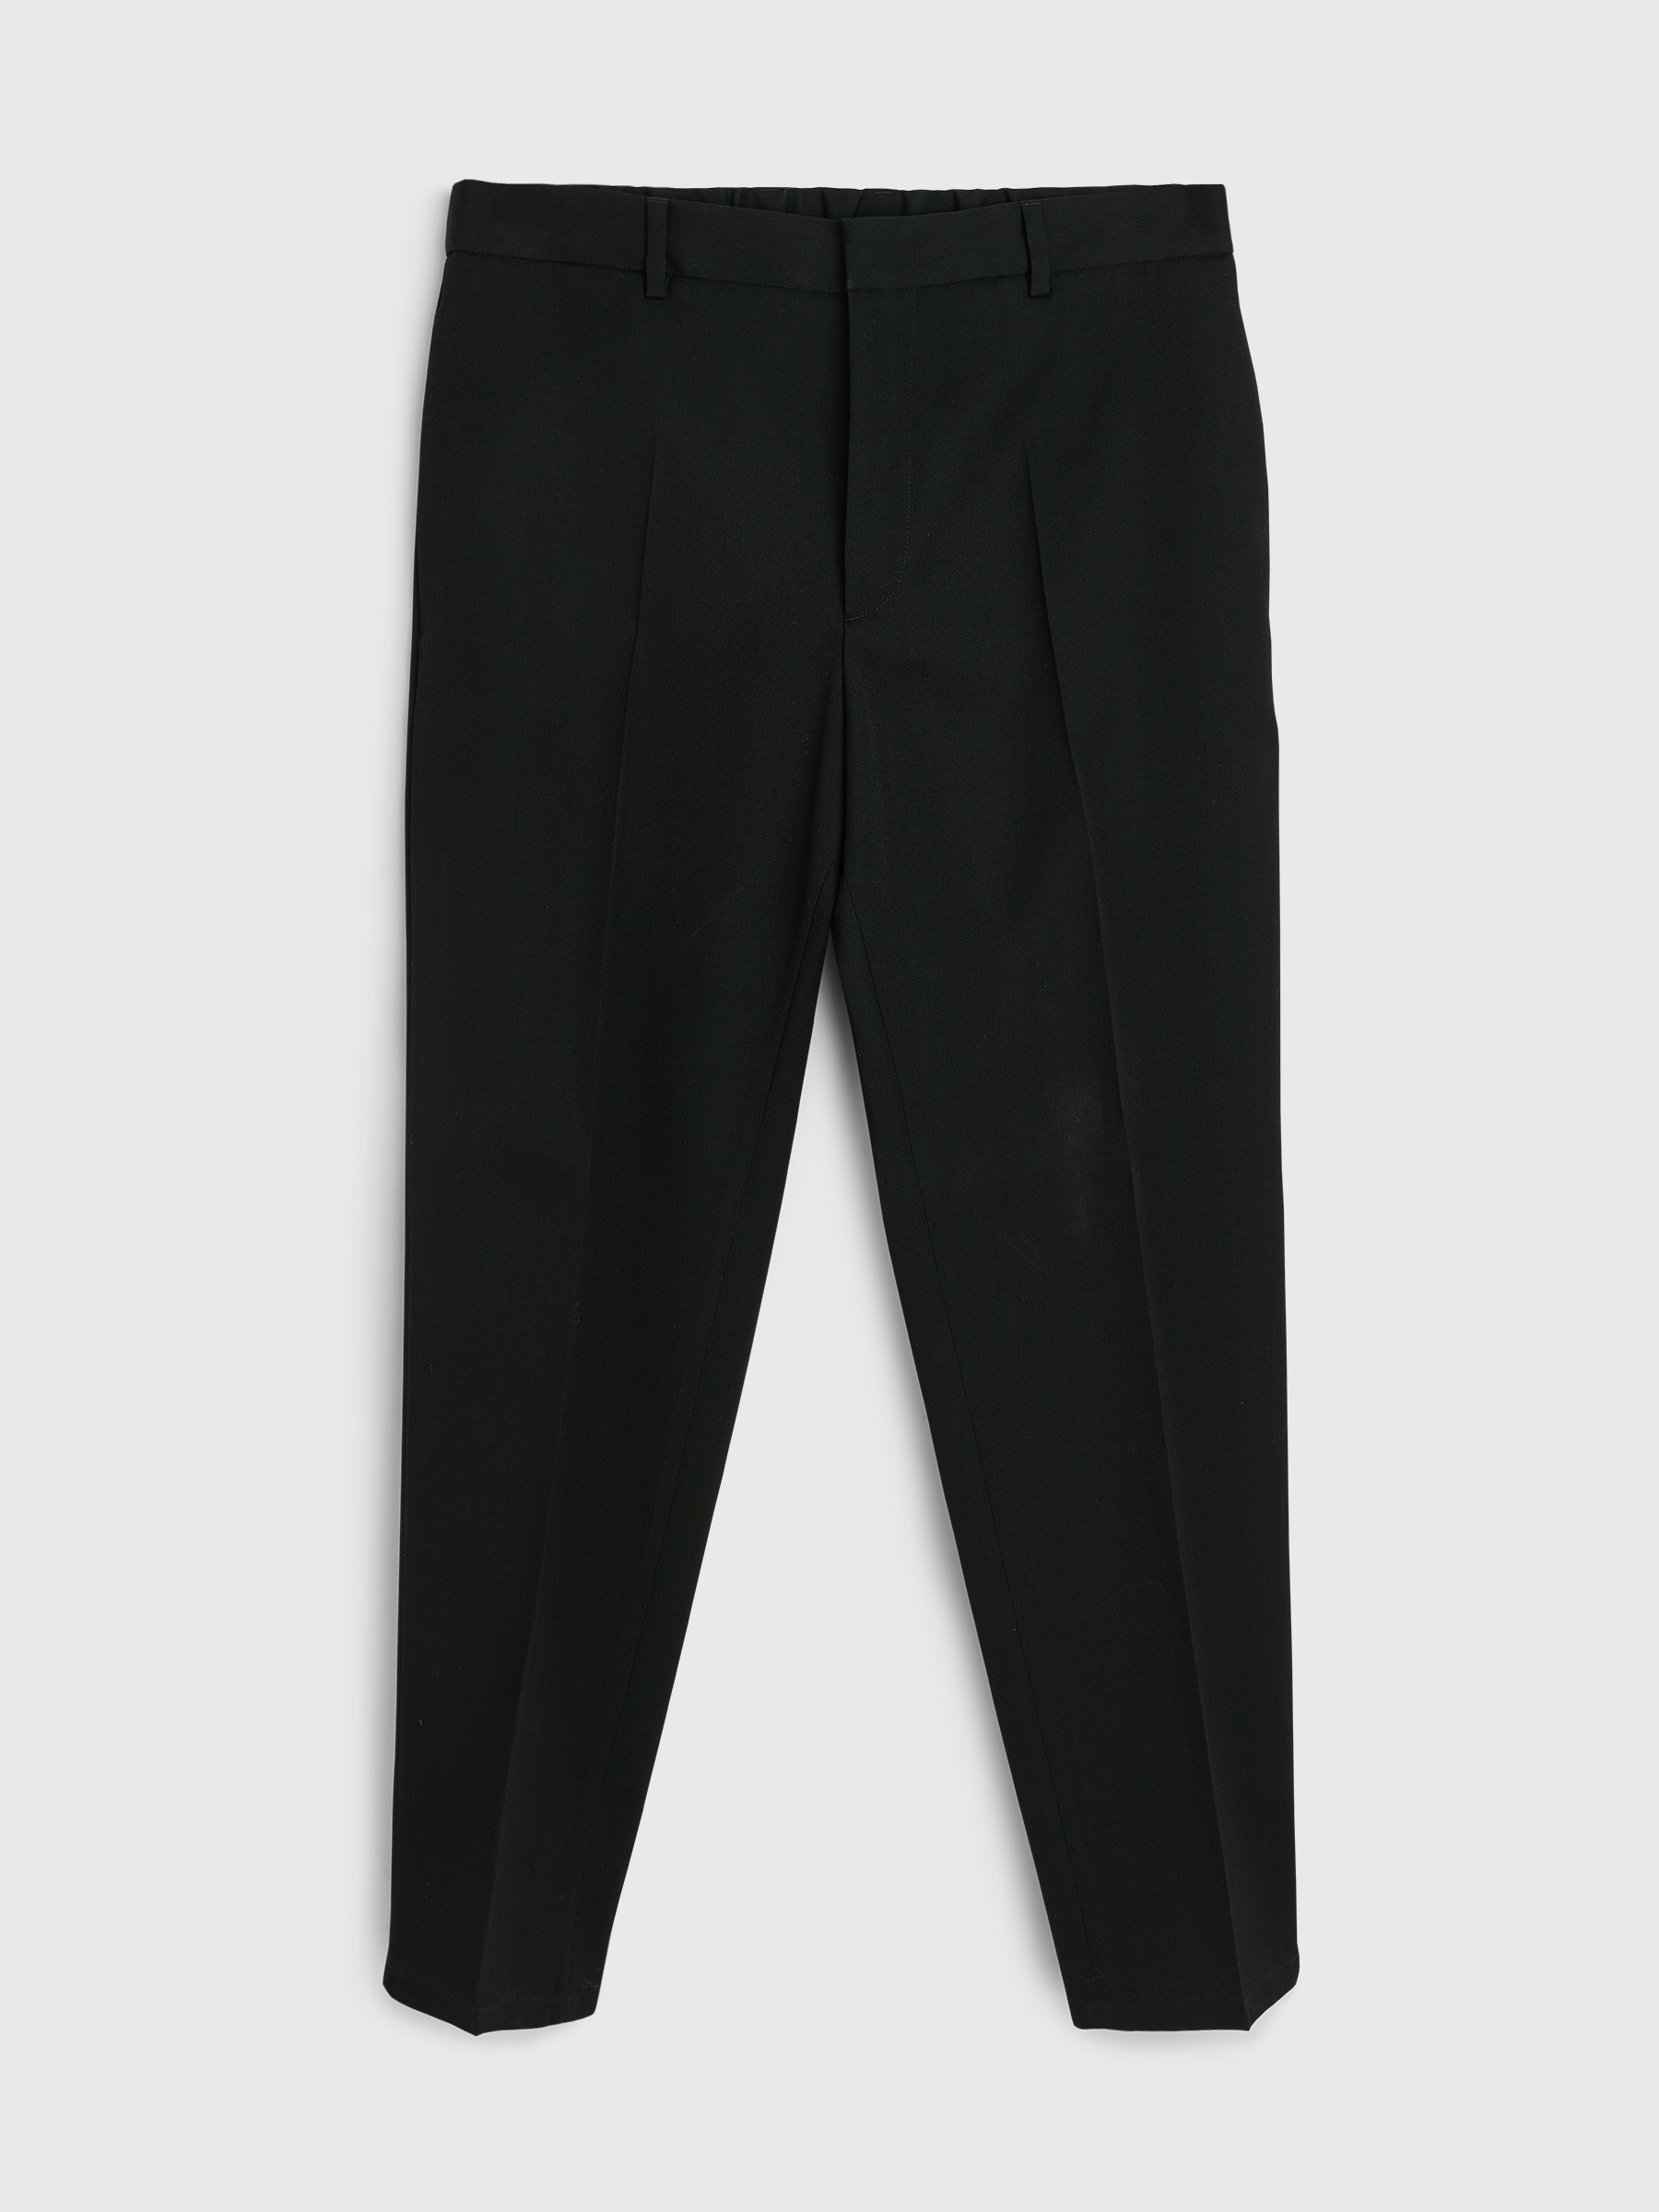 Bensol Mens Flat Front Slim Fit Wool Gabardine Pant Black 32W X 34L   Amazonin Clothing  Accessories